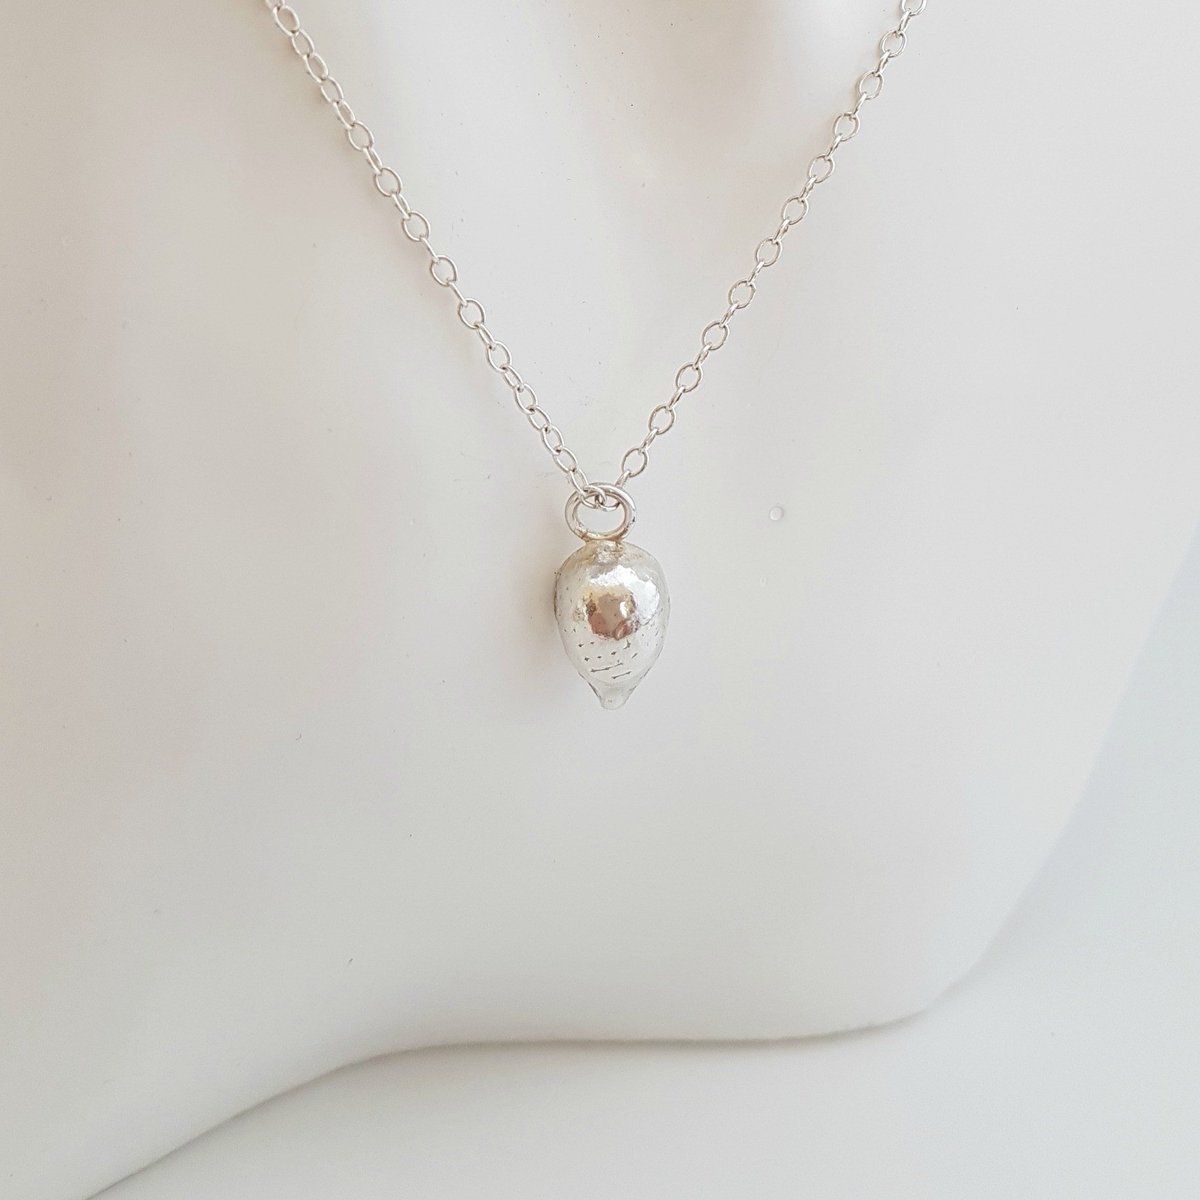 Tiny Sterling Silver Hedgehog Pendant Necklace tuppu.net/41f42b46 #womaninbiz #MiniatureHedgehog